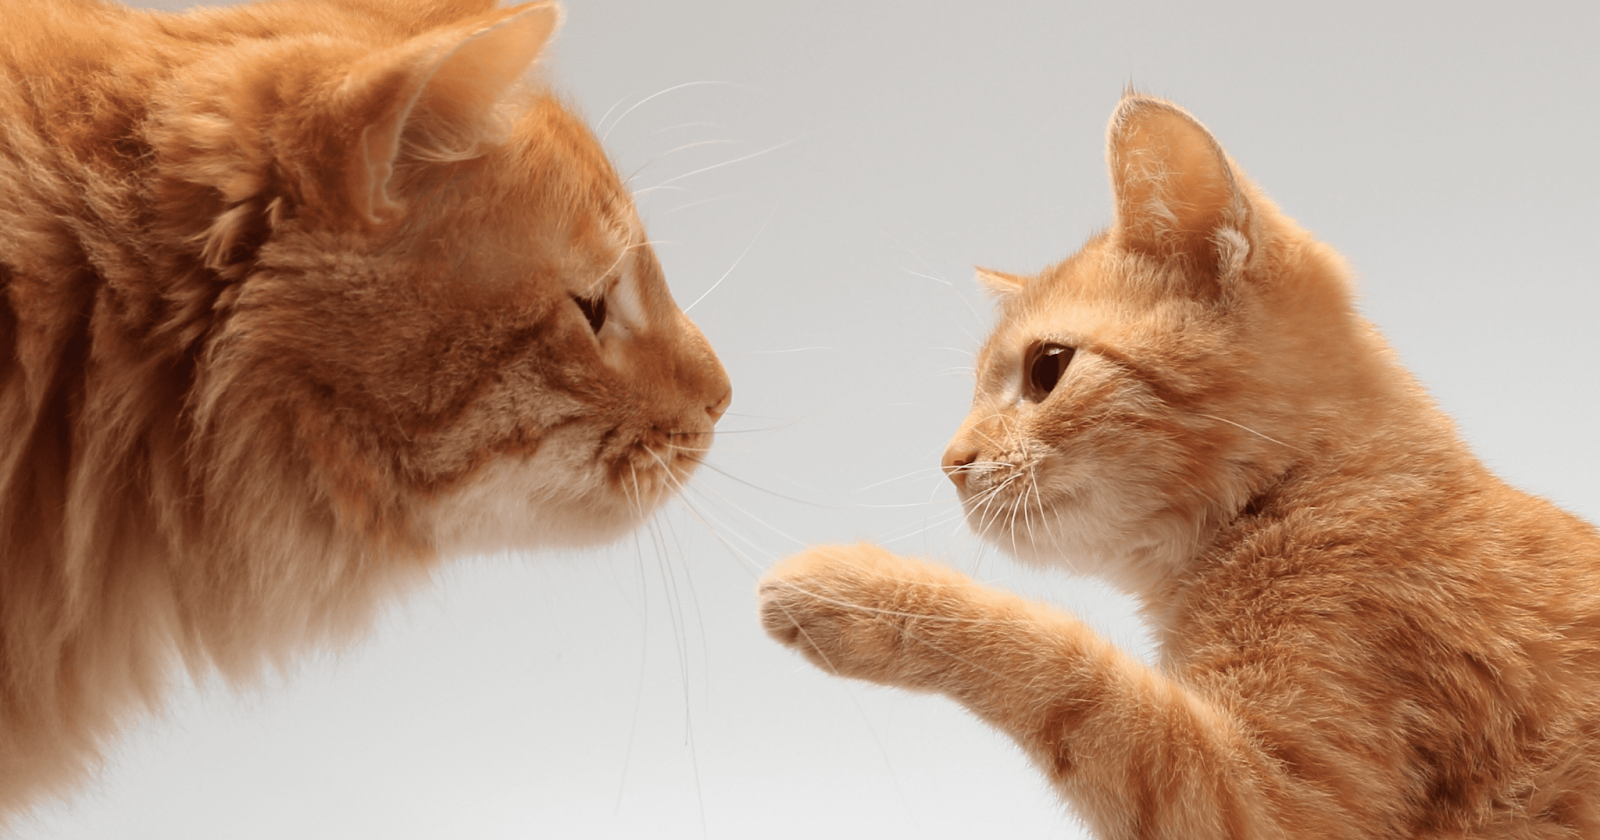 Orange tabby kitten reaching paw out gently toward adult orange tabby's face